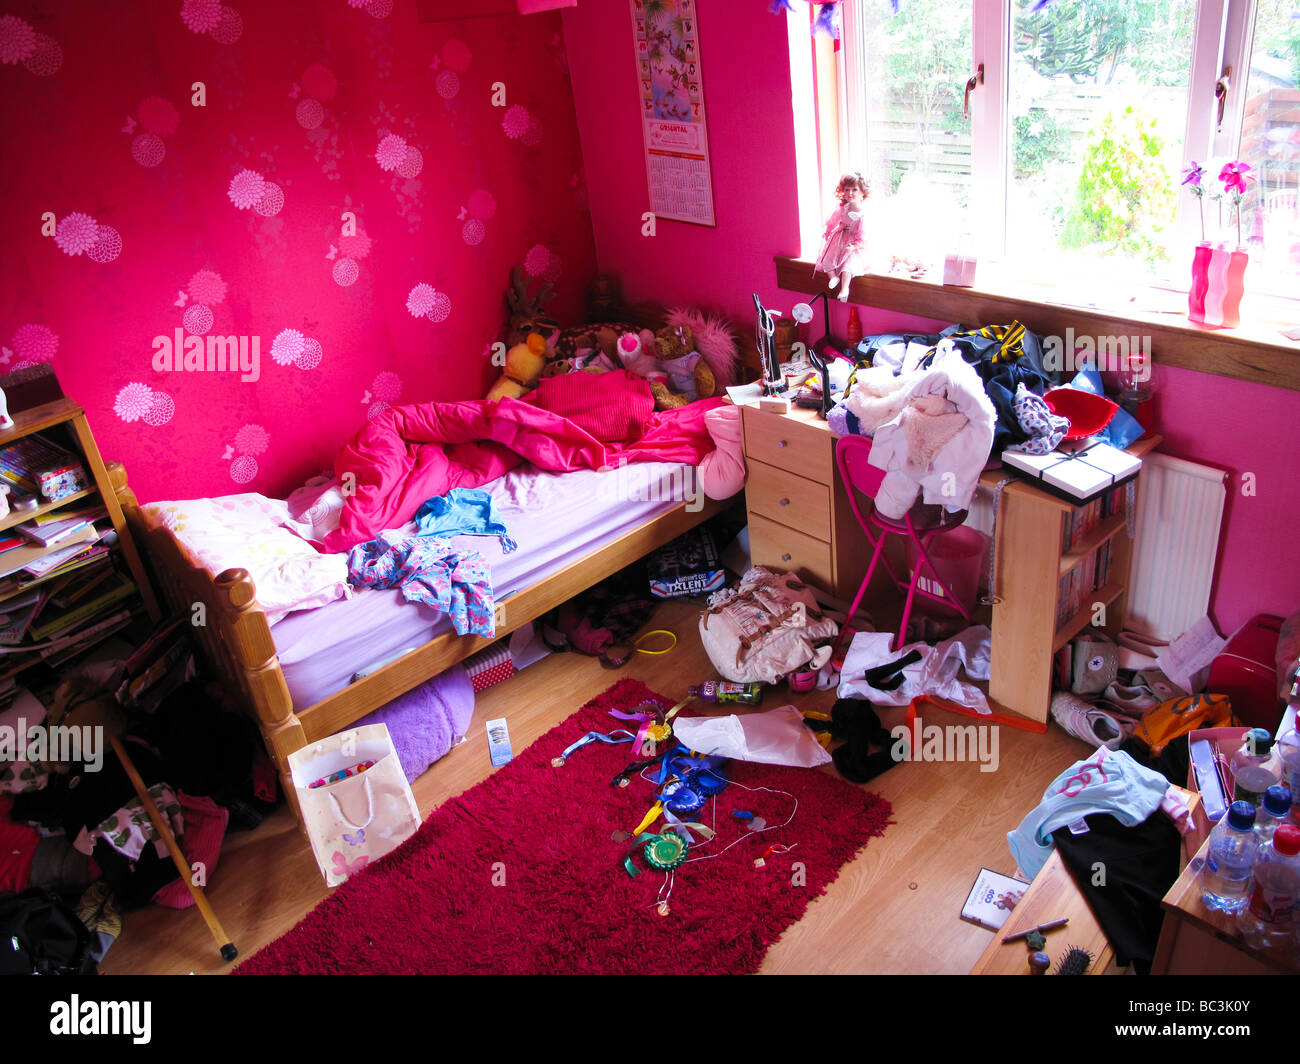 Messy Girls Bedroom Stock Photo 24667019 Alamy